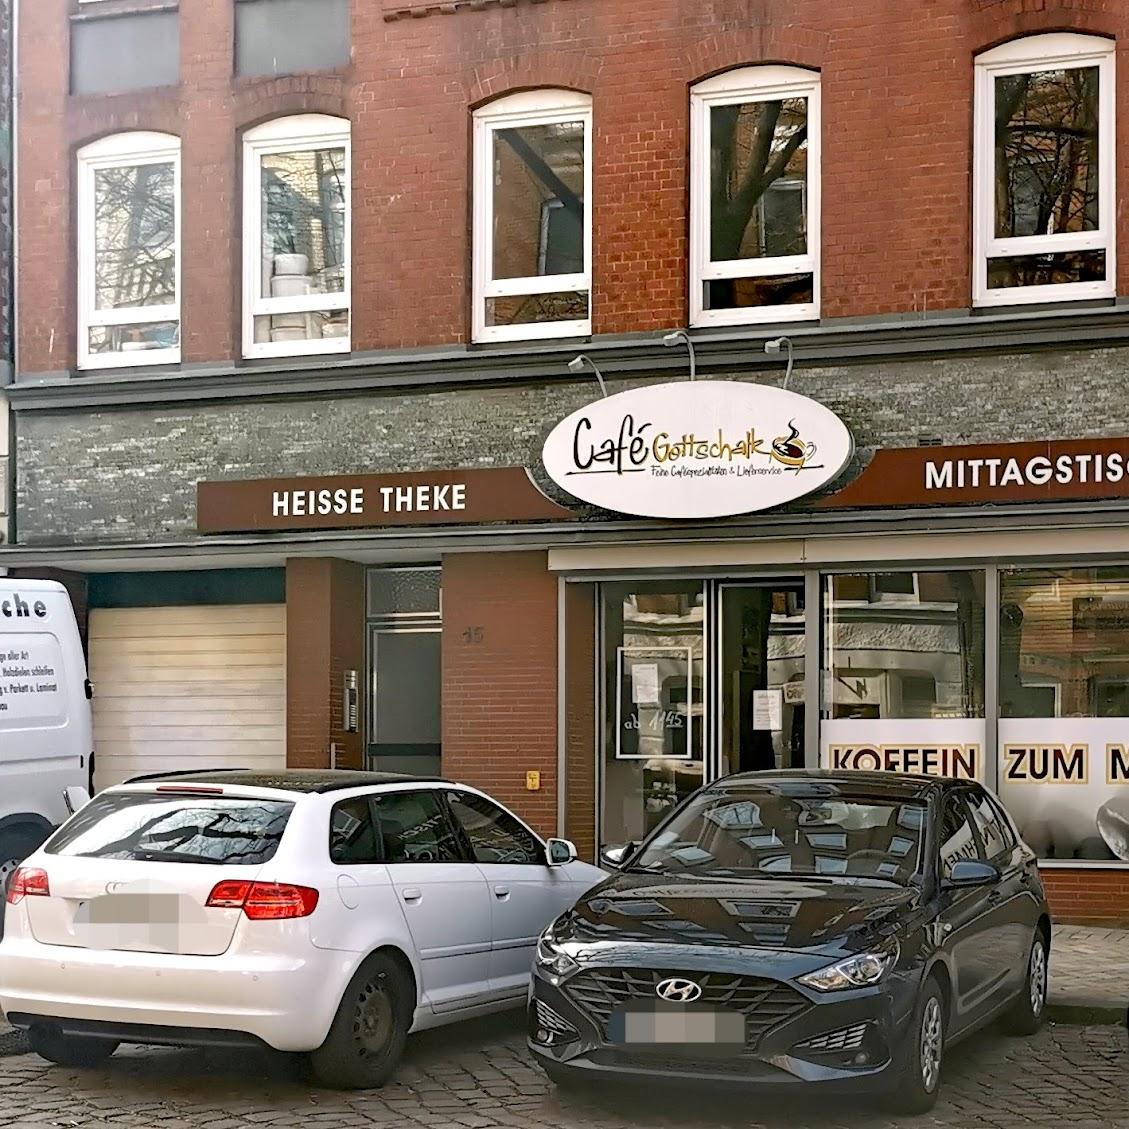 Restaurant "Café + Lieferservice Gottschalk" in Kiel